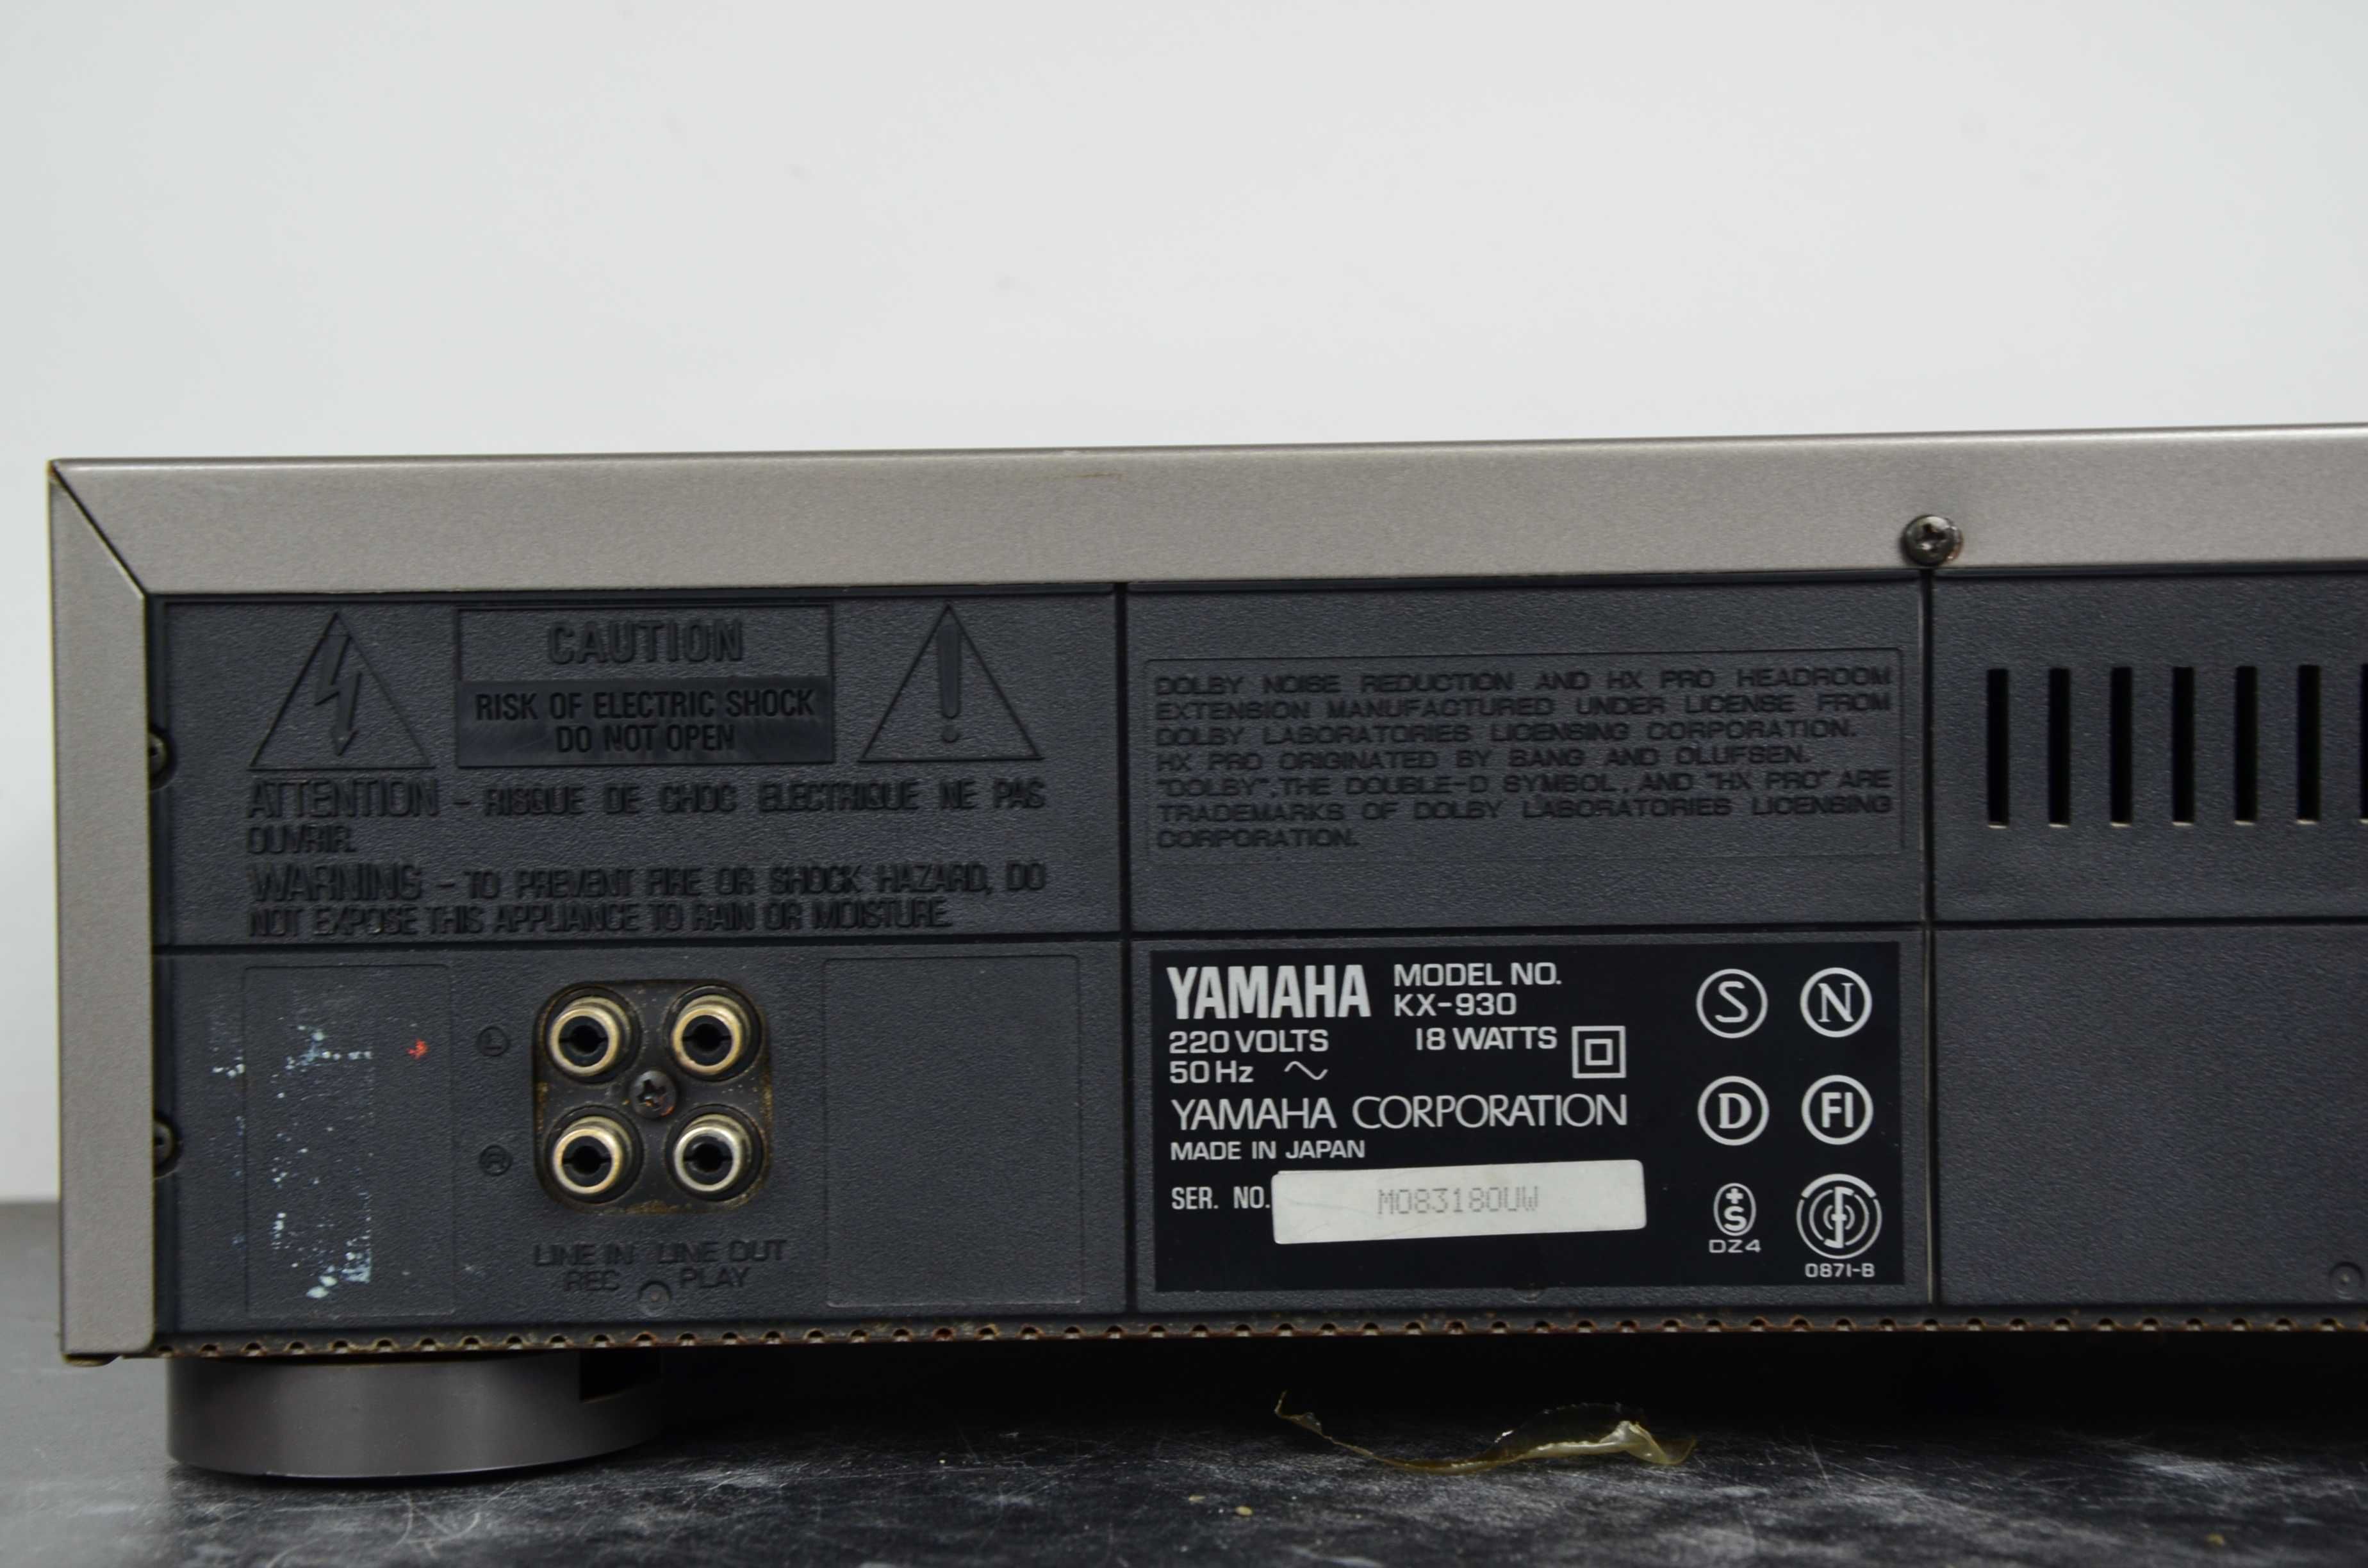 Magnetofon Deck YAMAHA KX-930 HI END